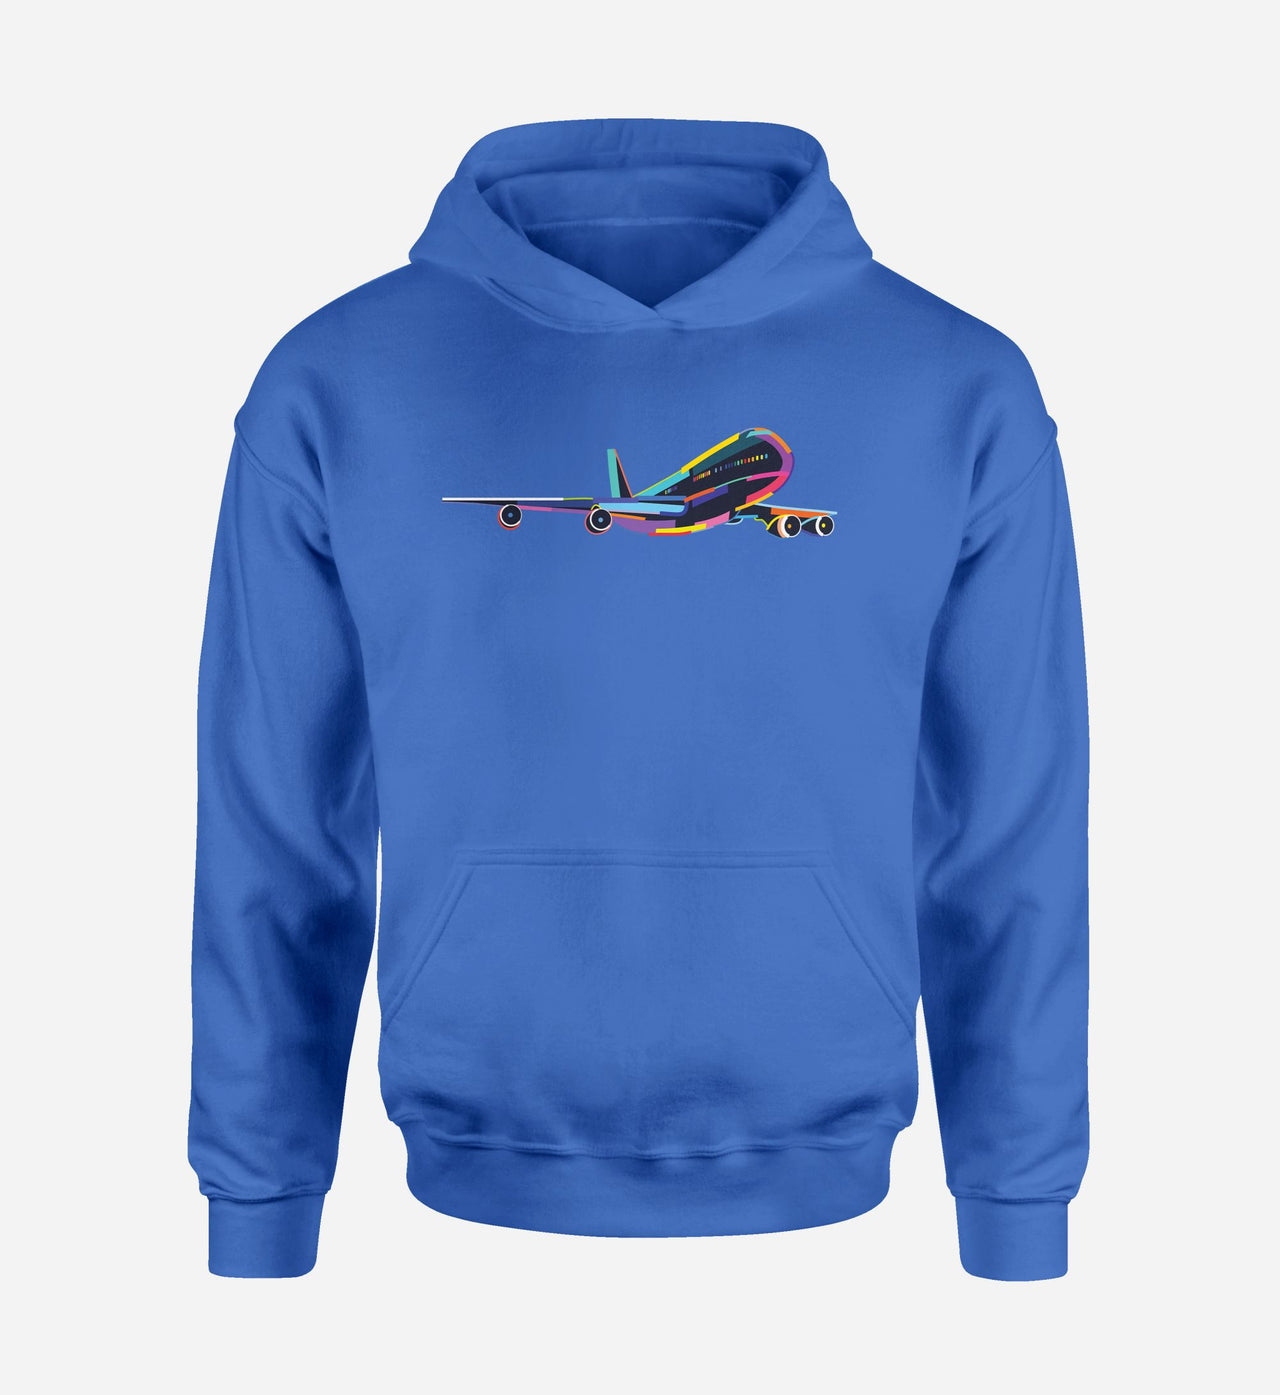 Multicolor Airplane Designed Hoodies